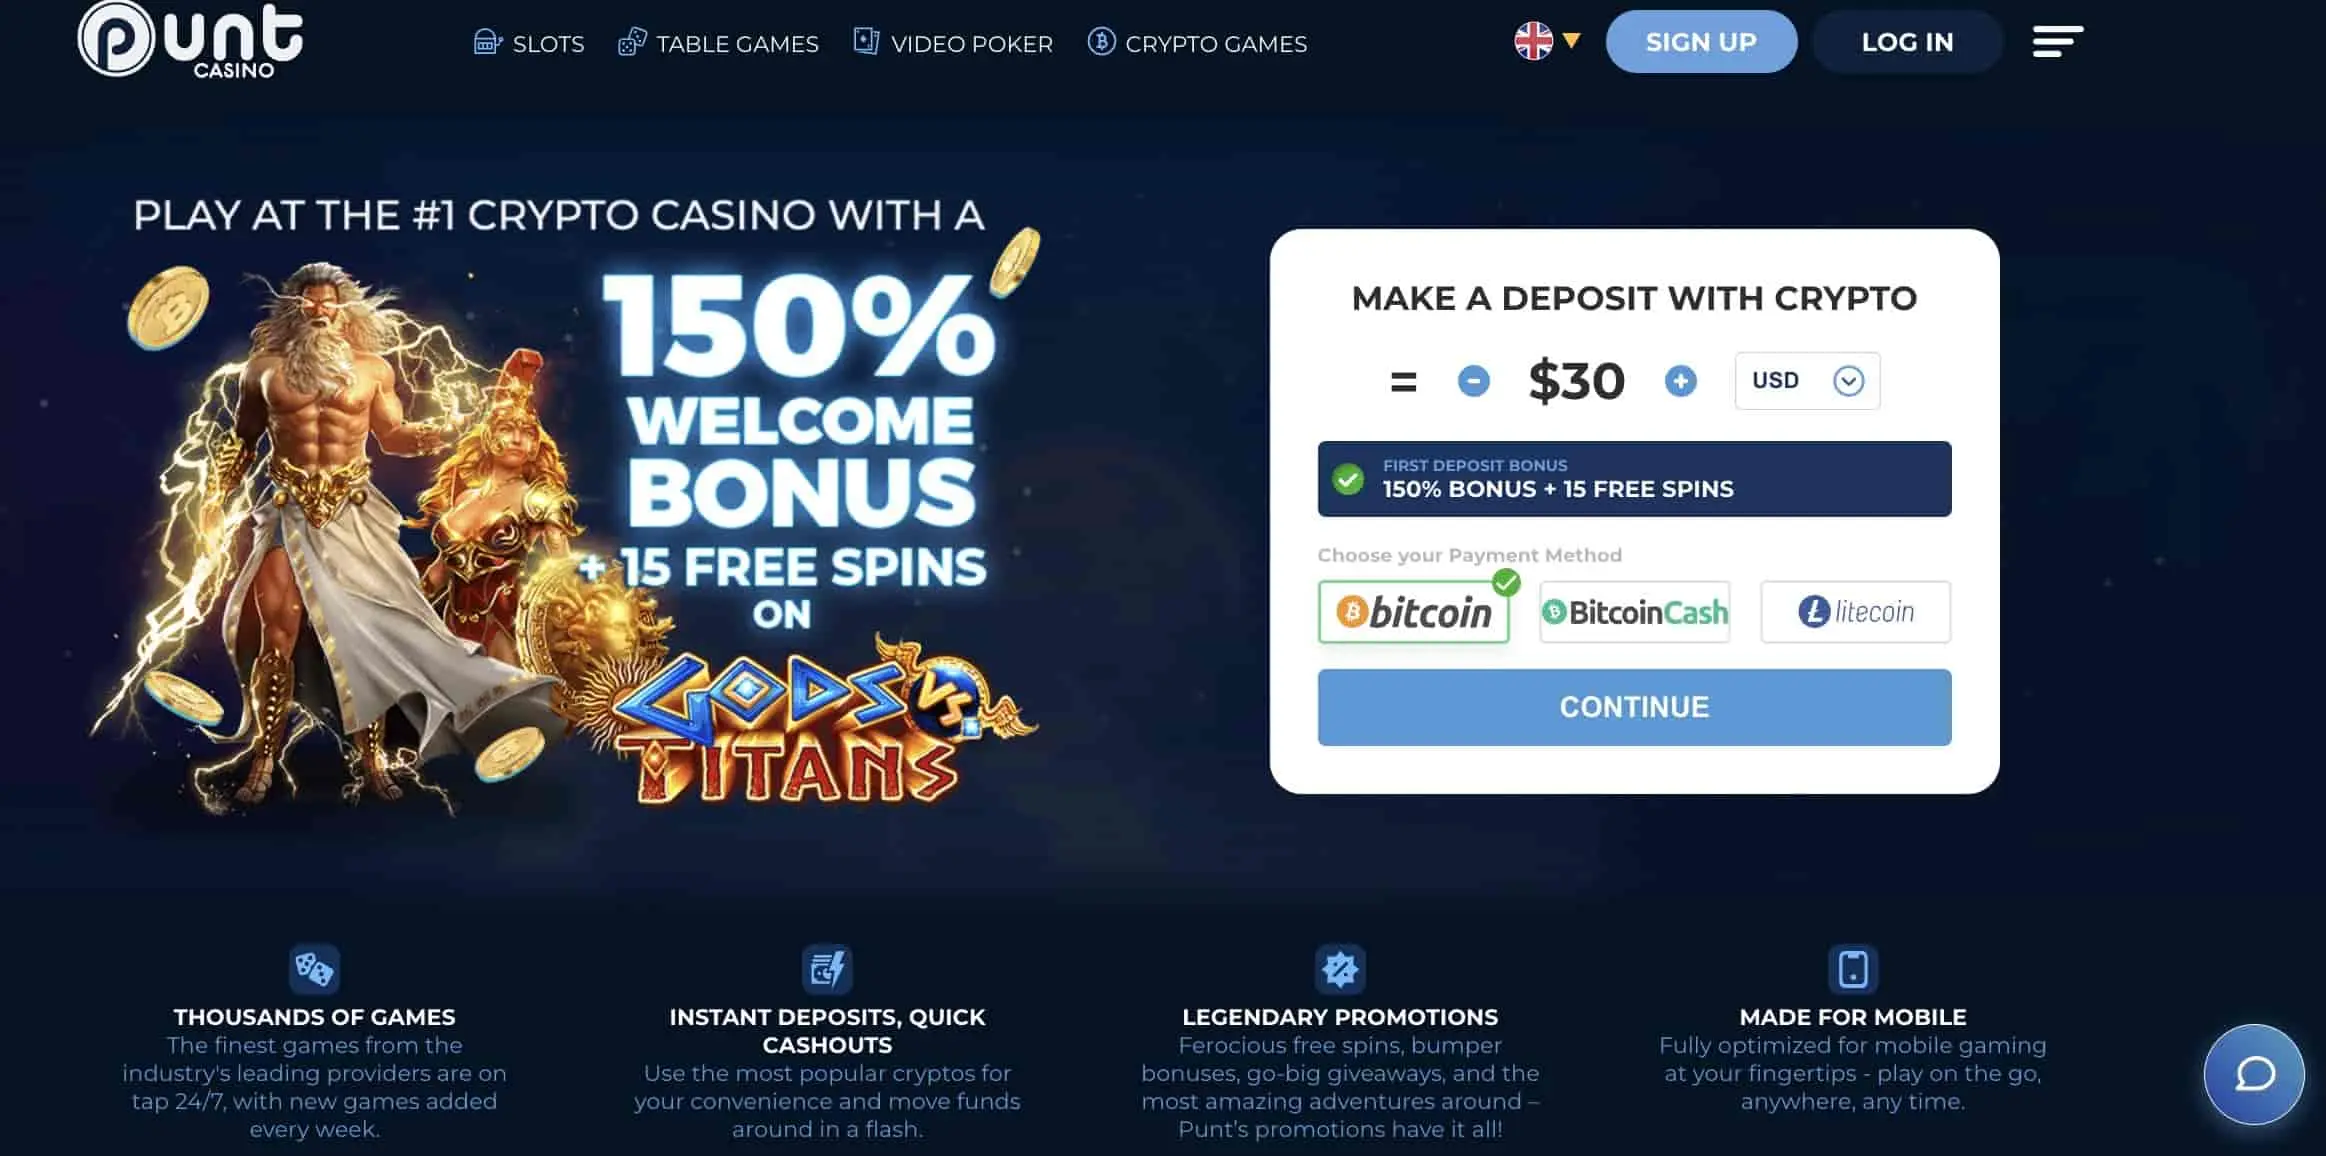 Punt casino homepage larger